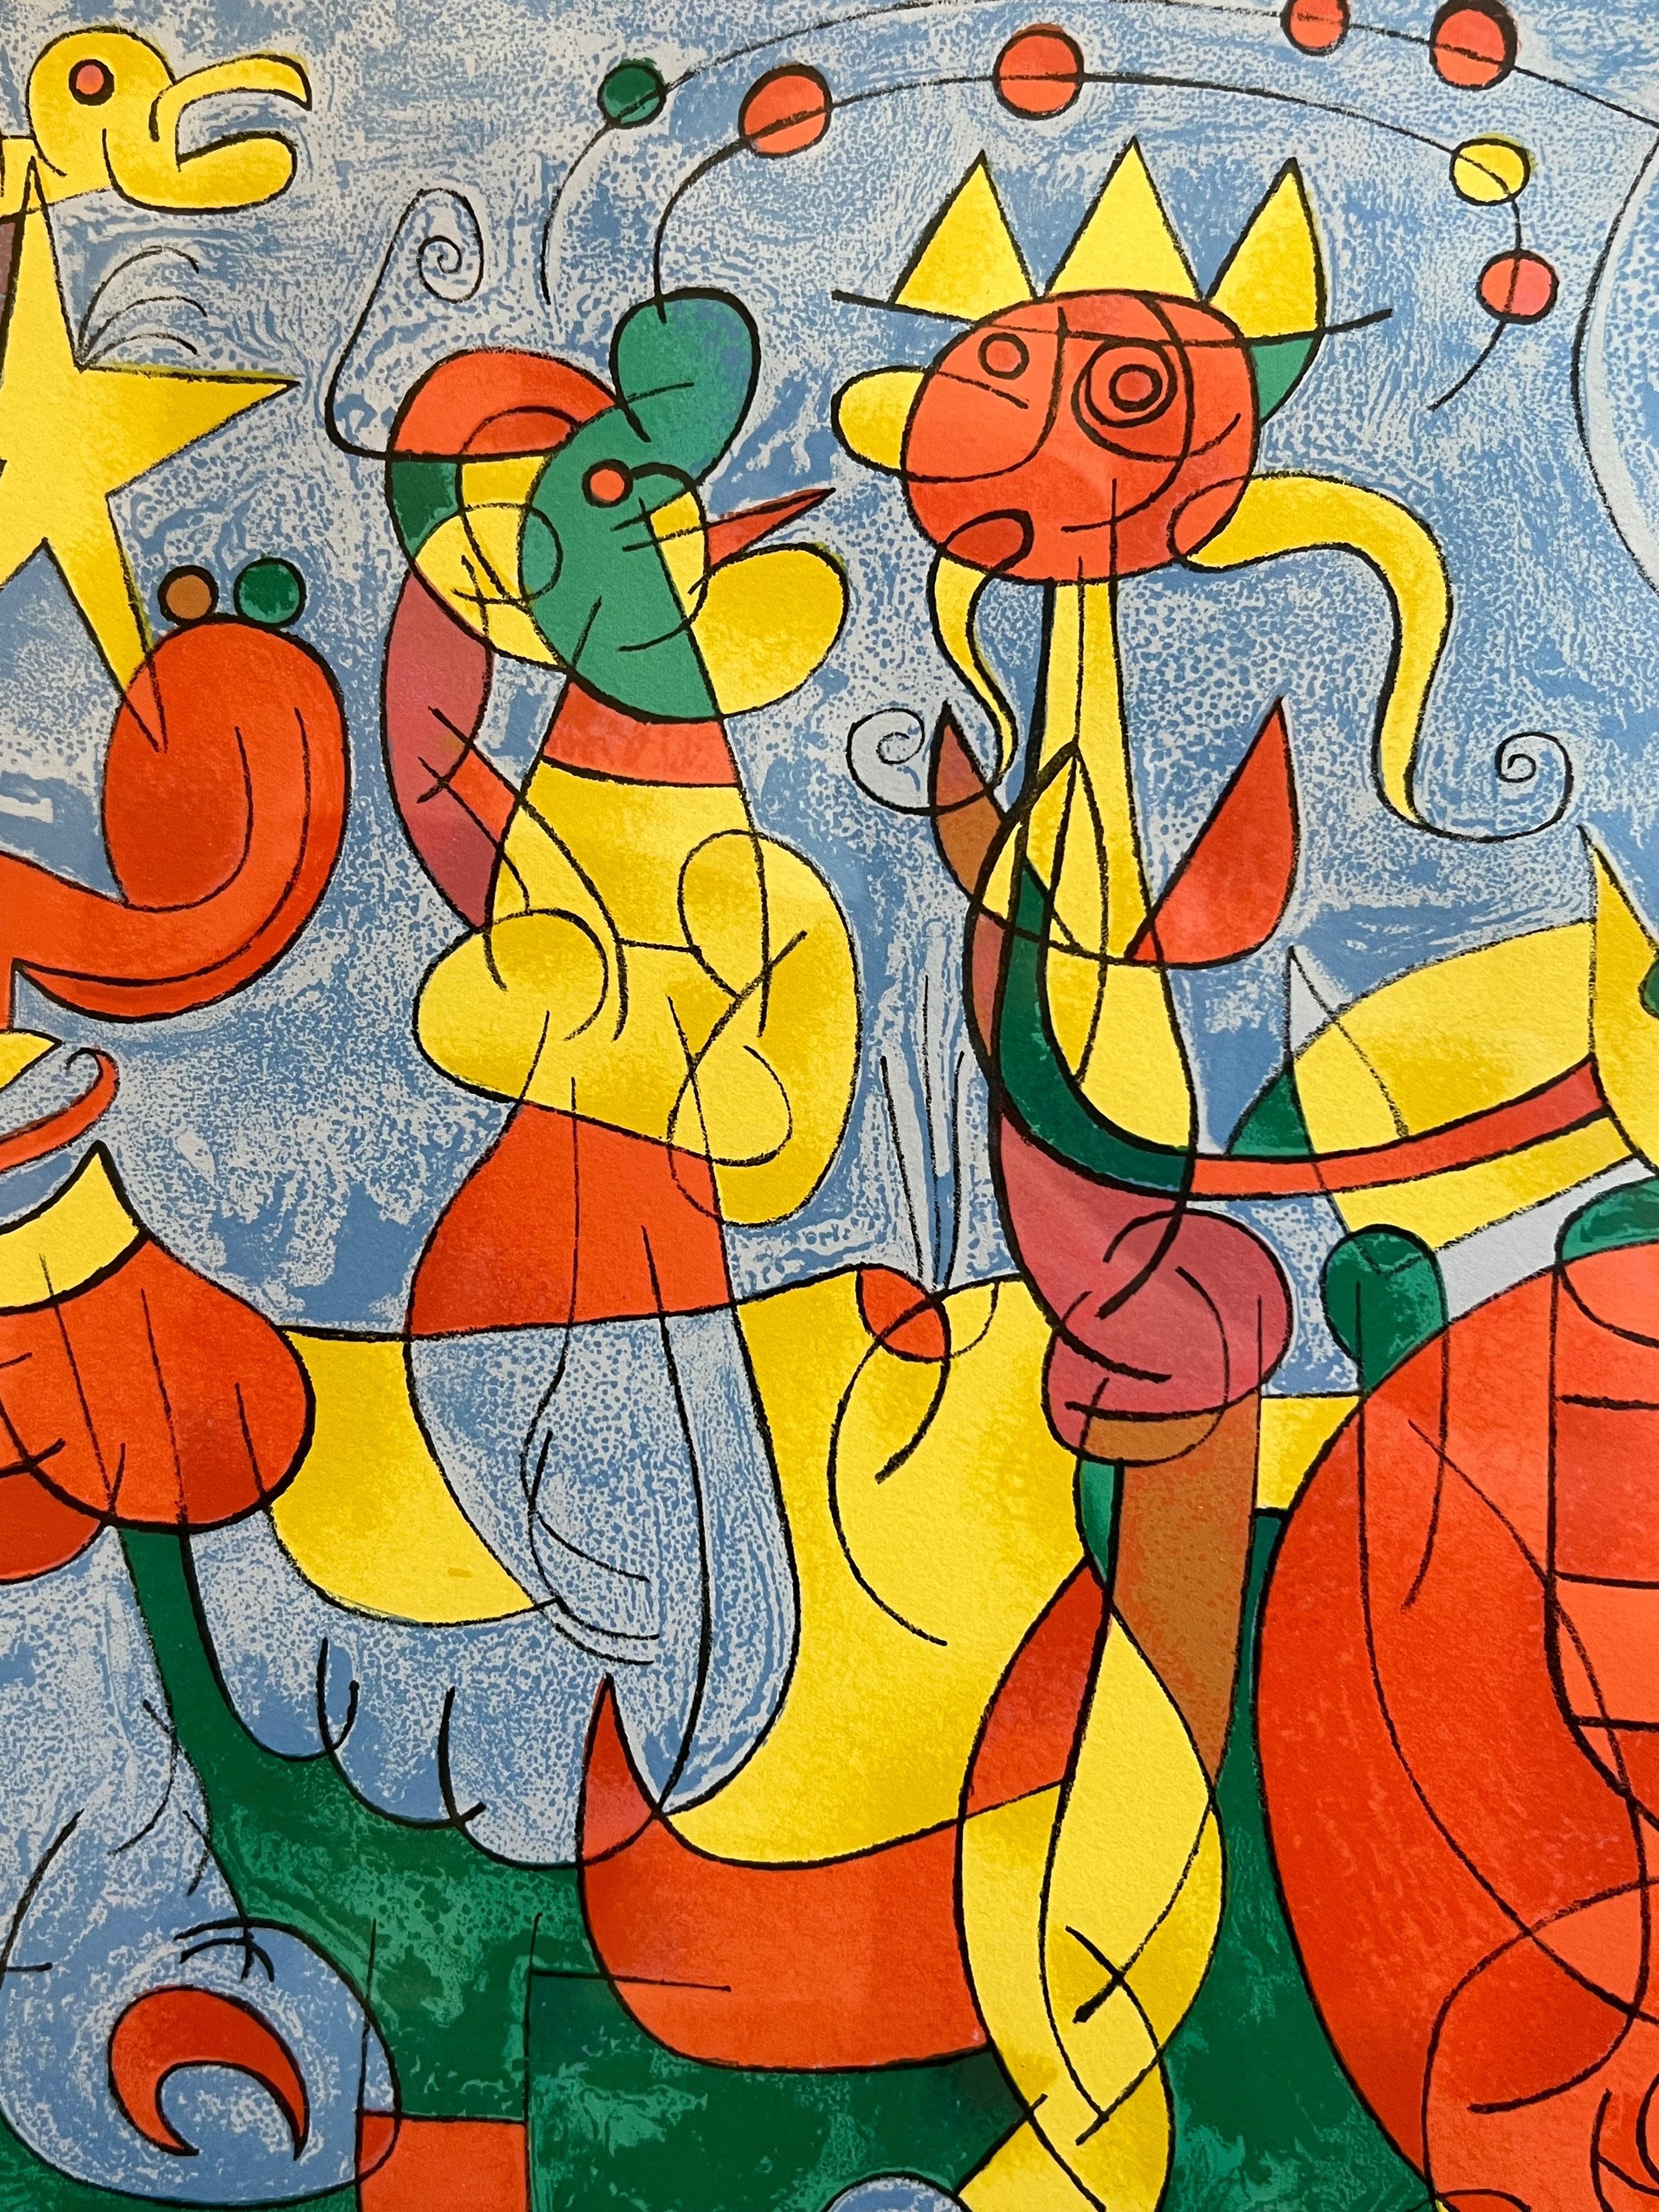 Grand Joan Miro Ubu roi (King Ubu) : planche 3 LITHOGRAPH colorée, 1966 - Print de Joan Miró